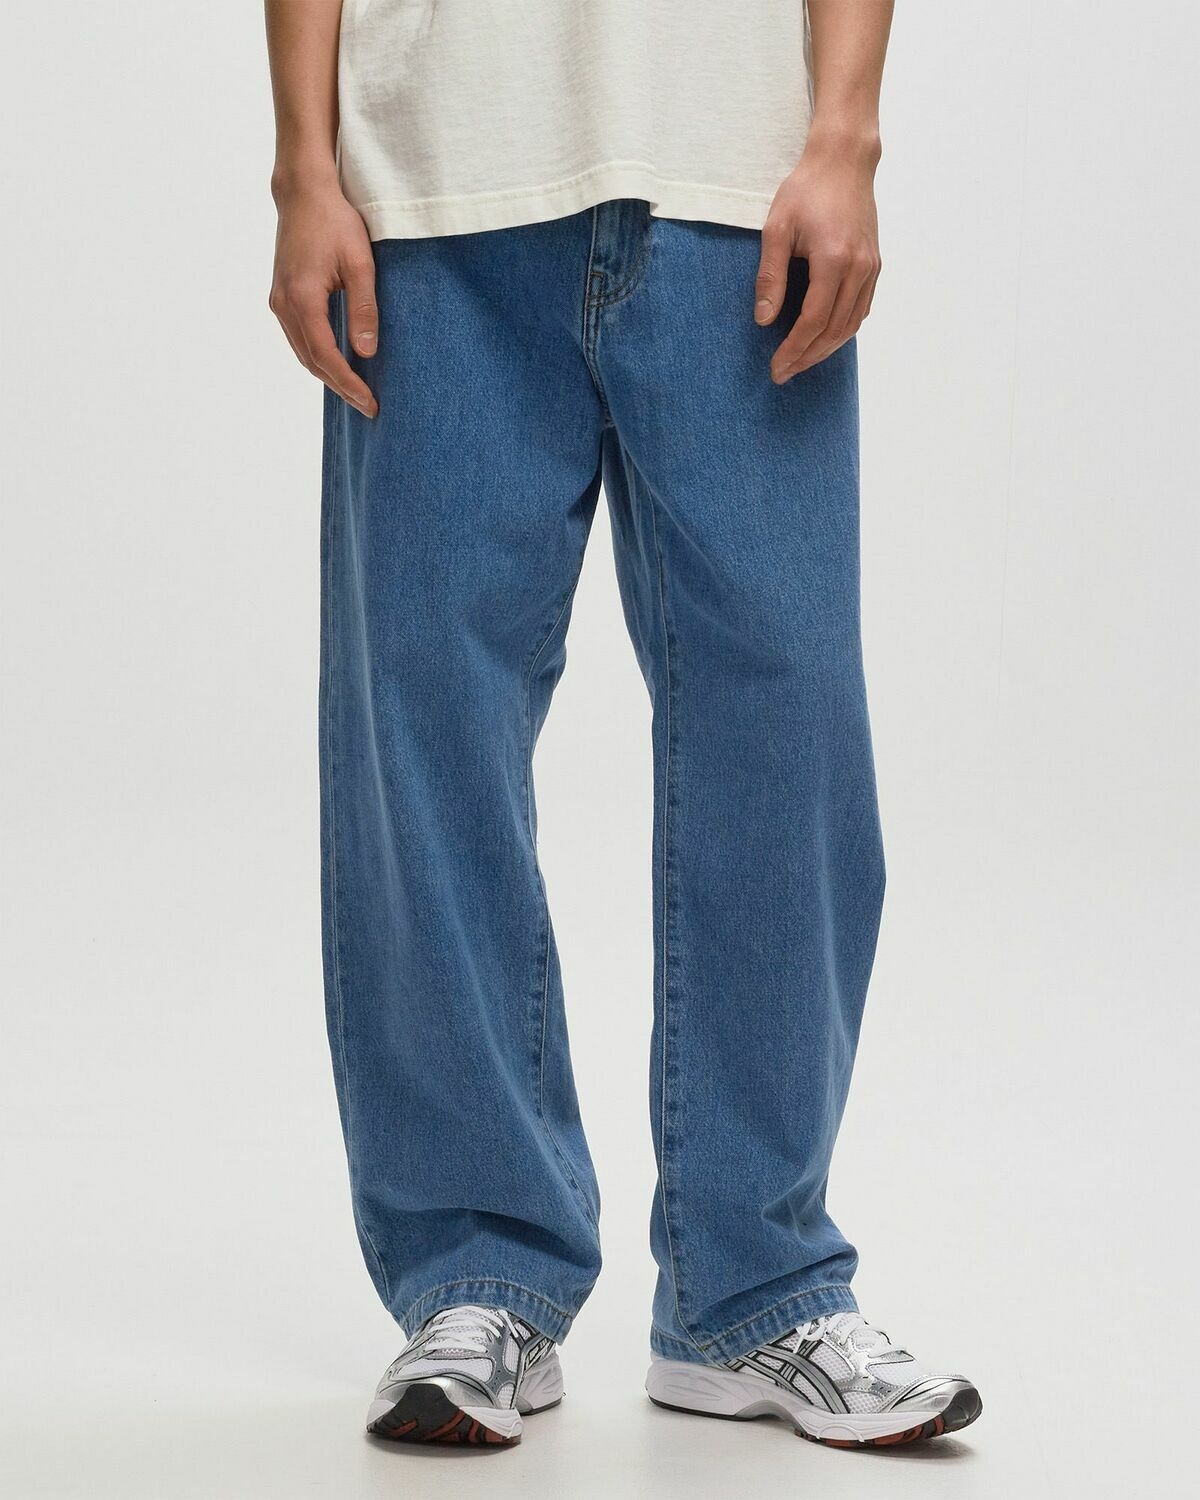 Carhartt Wip Landon Pant Blue - Mens - Jeans